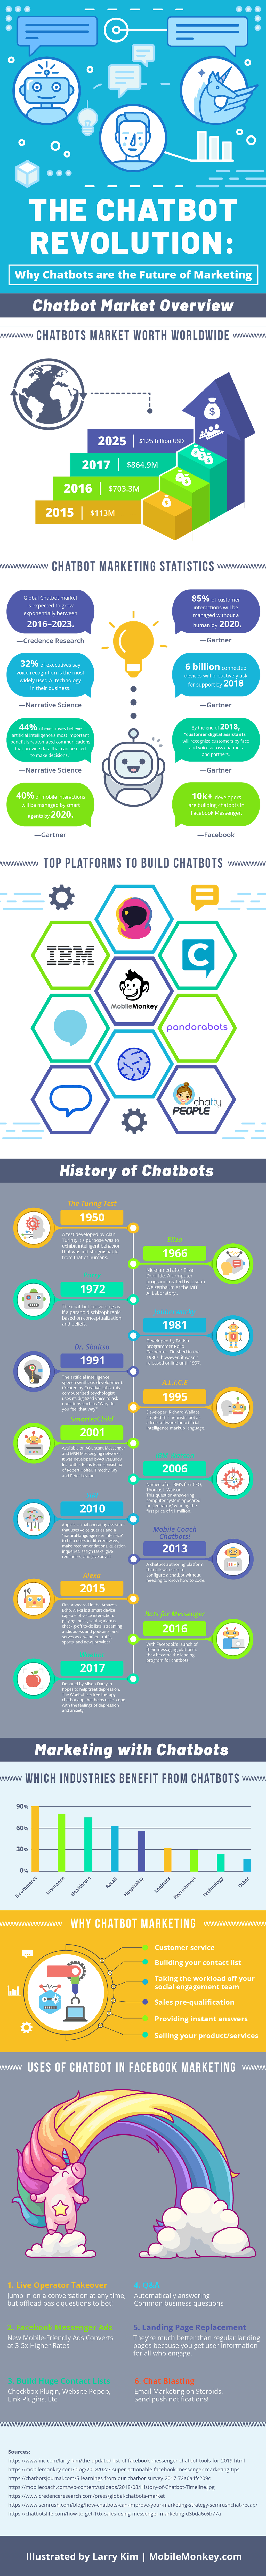 chatbot marketing statistics infographic